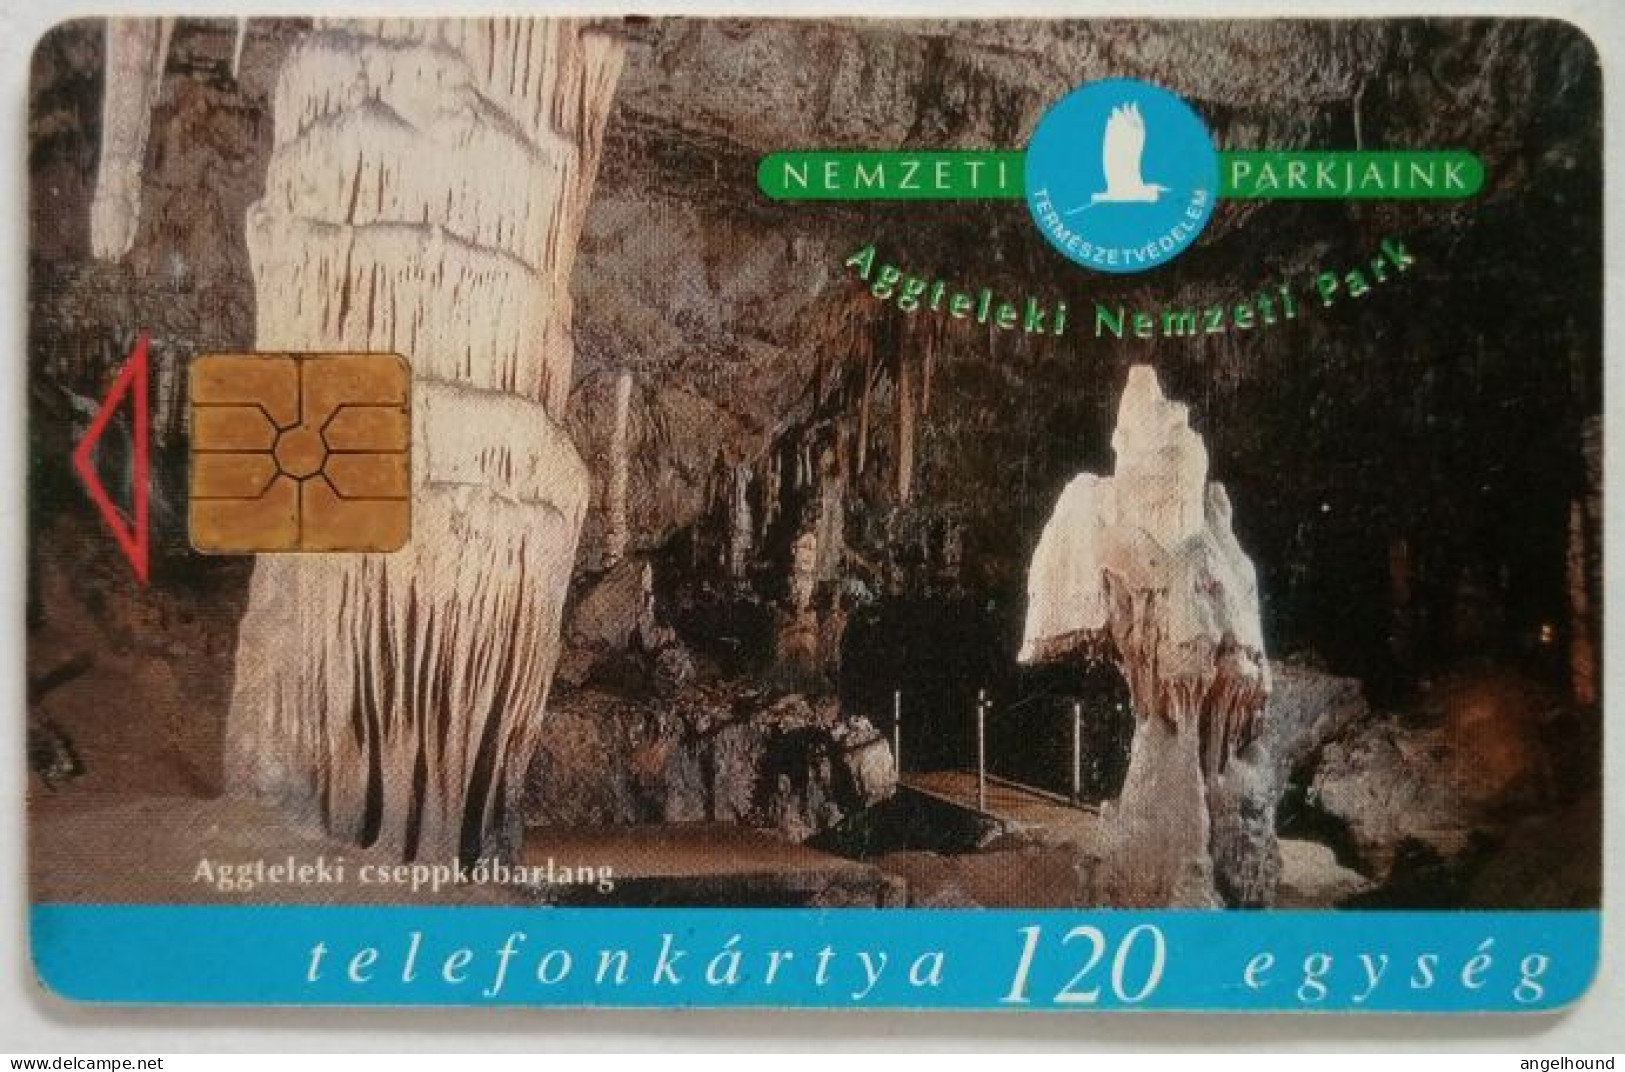 Hungary 120 Units Chip Card - AggtelekiNemzeti Park - Ungarn